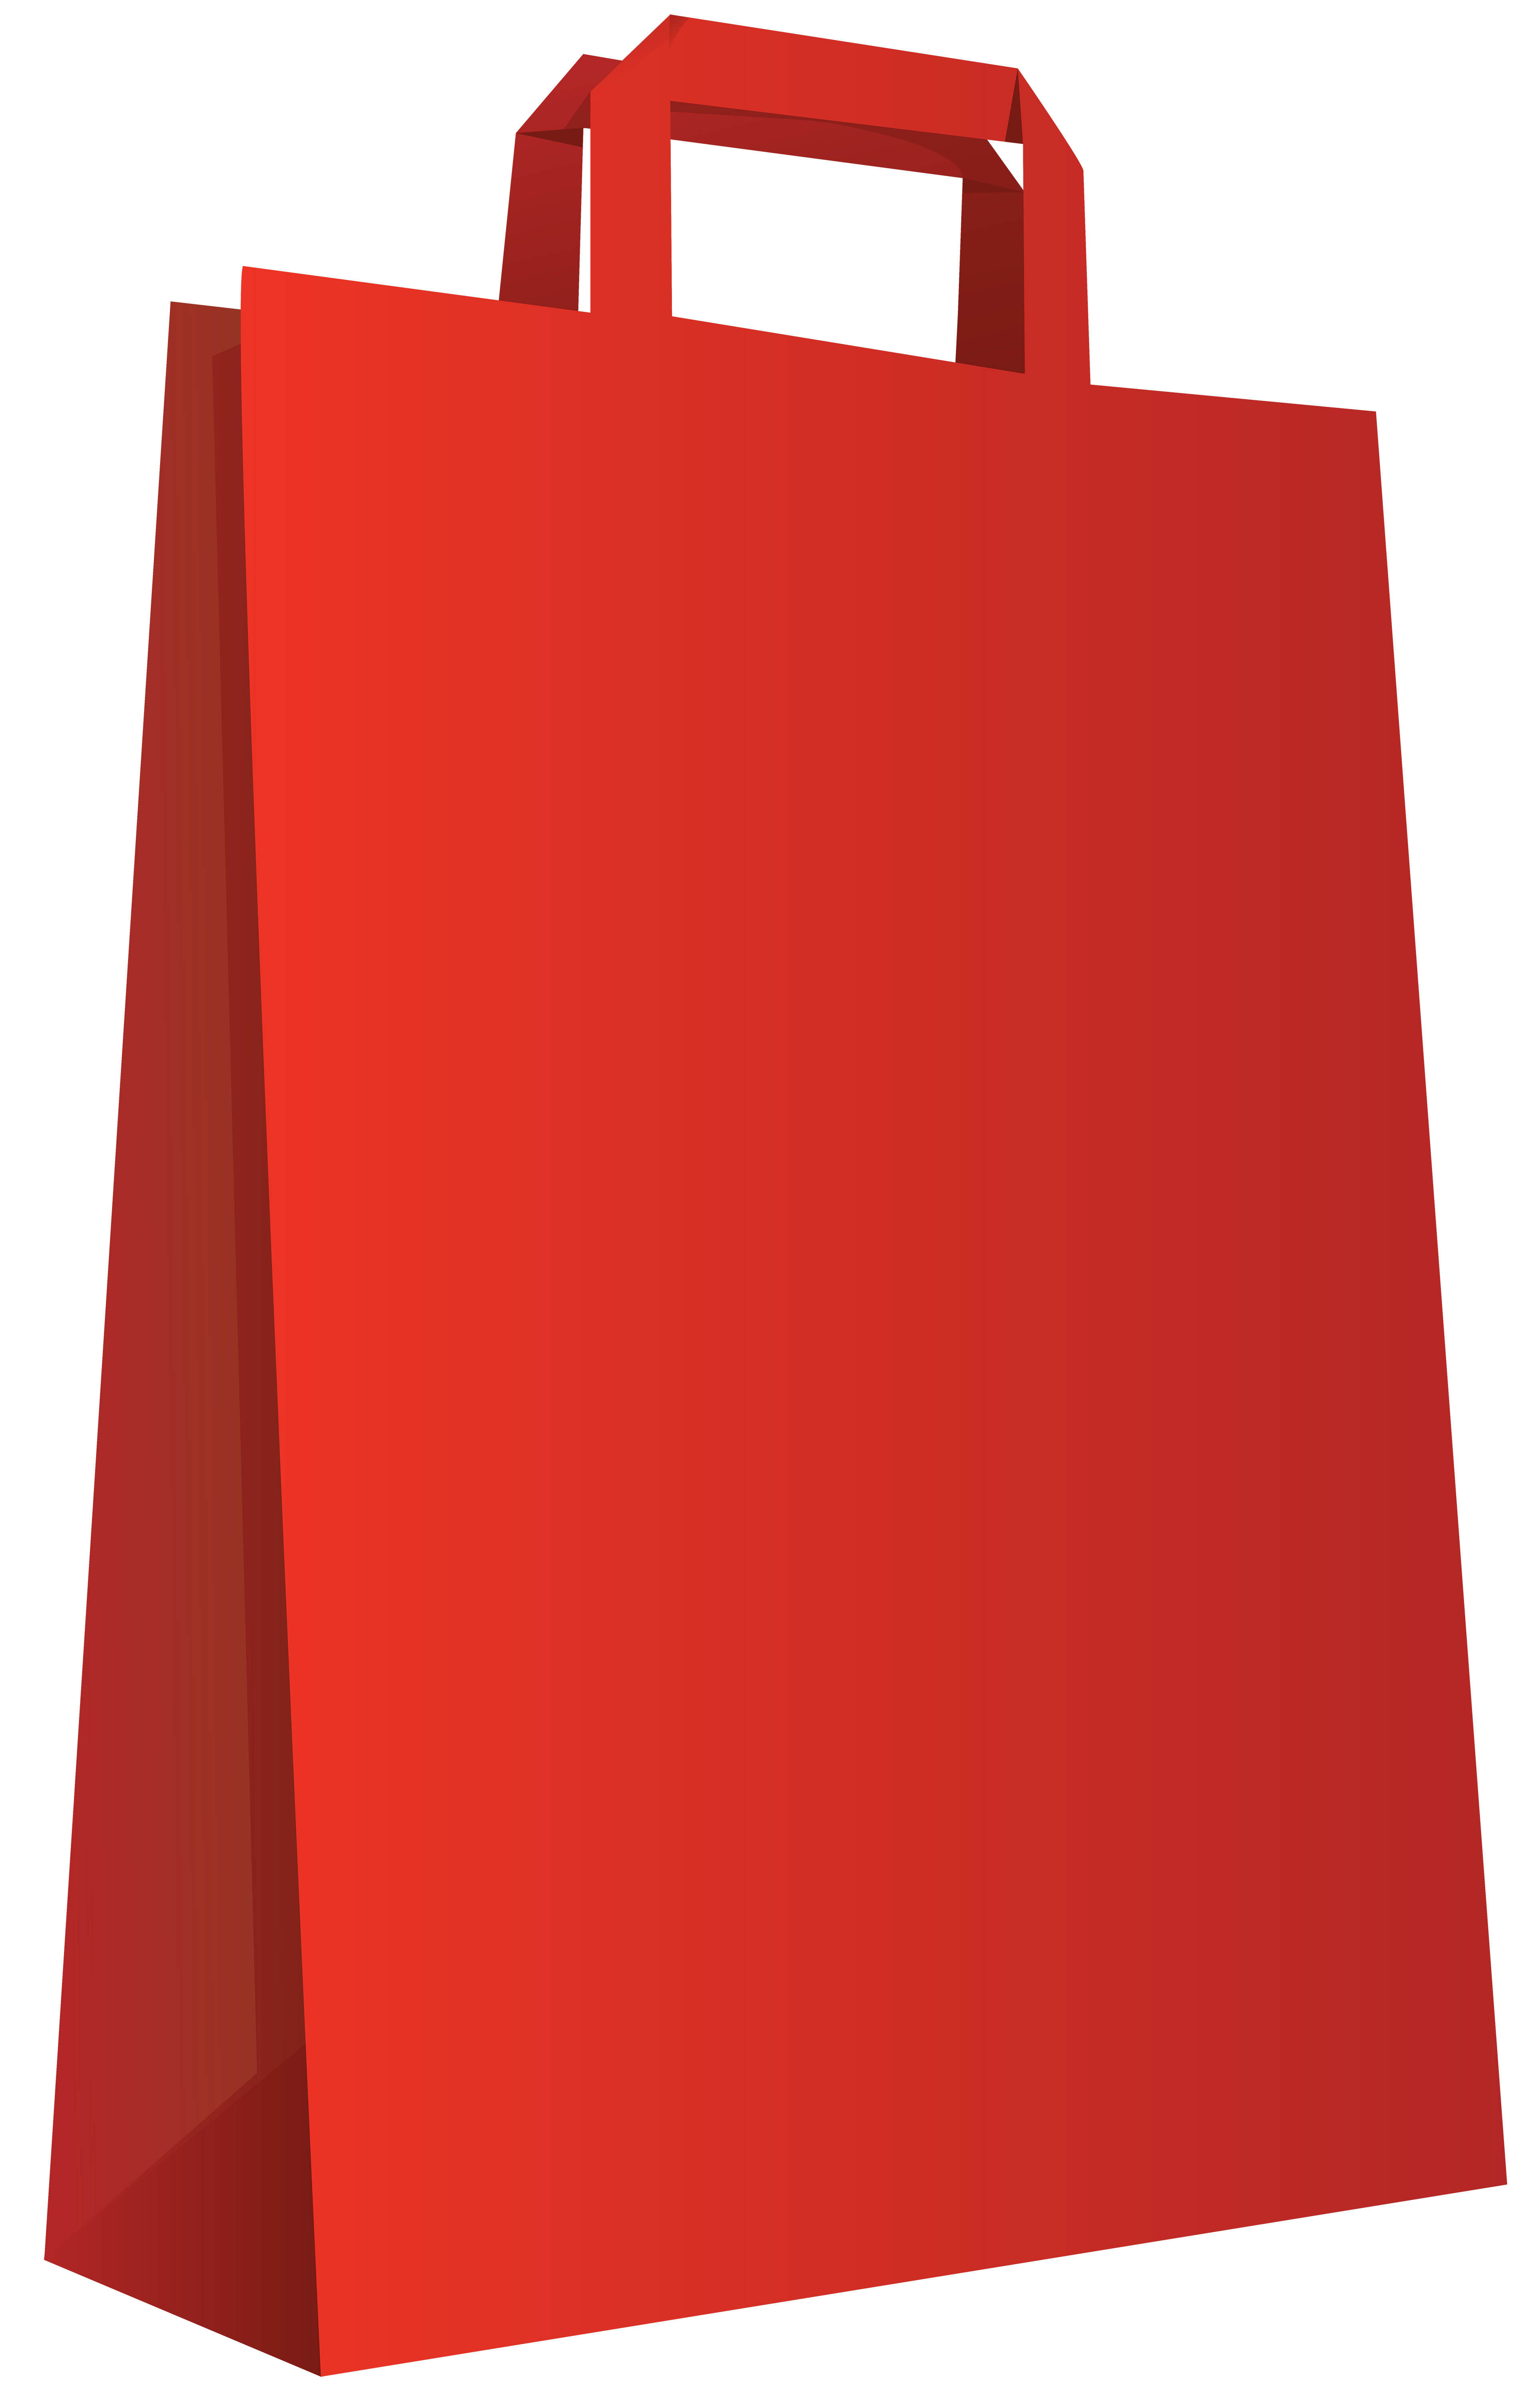 Red bag transparent.